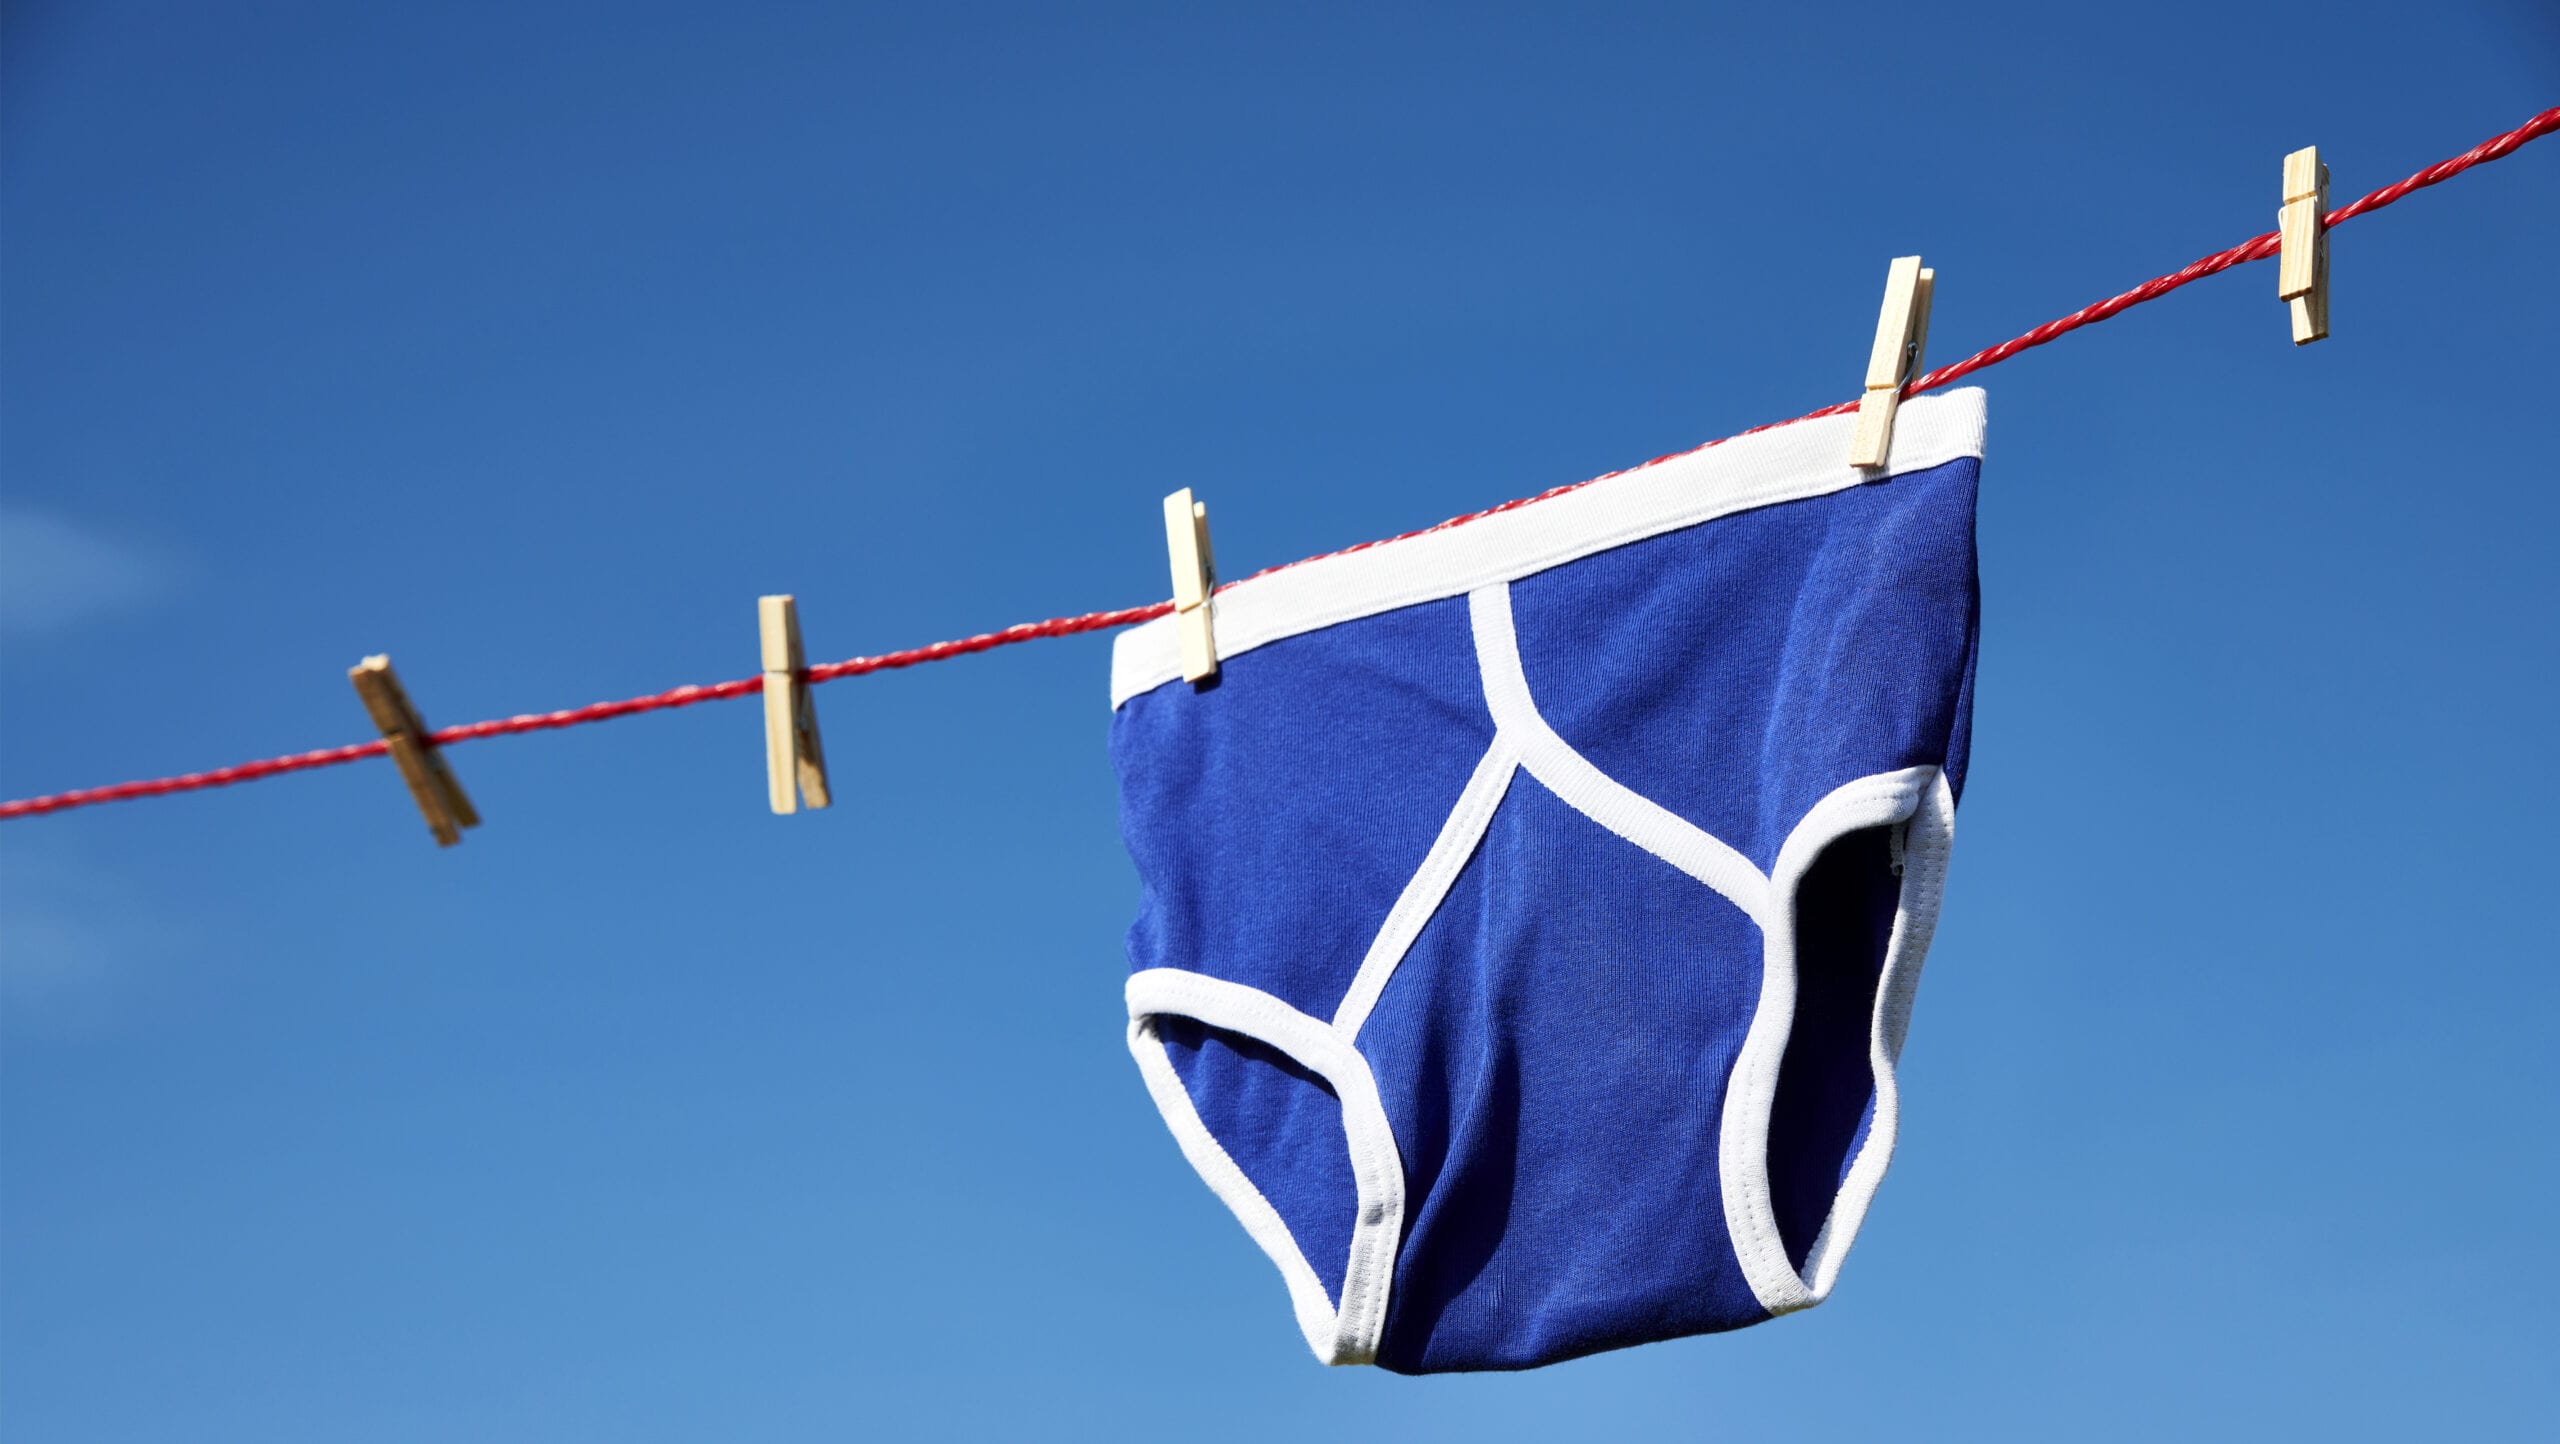 https://xtramagazine.com/wp-content/uploads/2020/06/trans-underwear-scaled.jpg